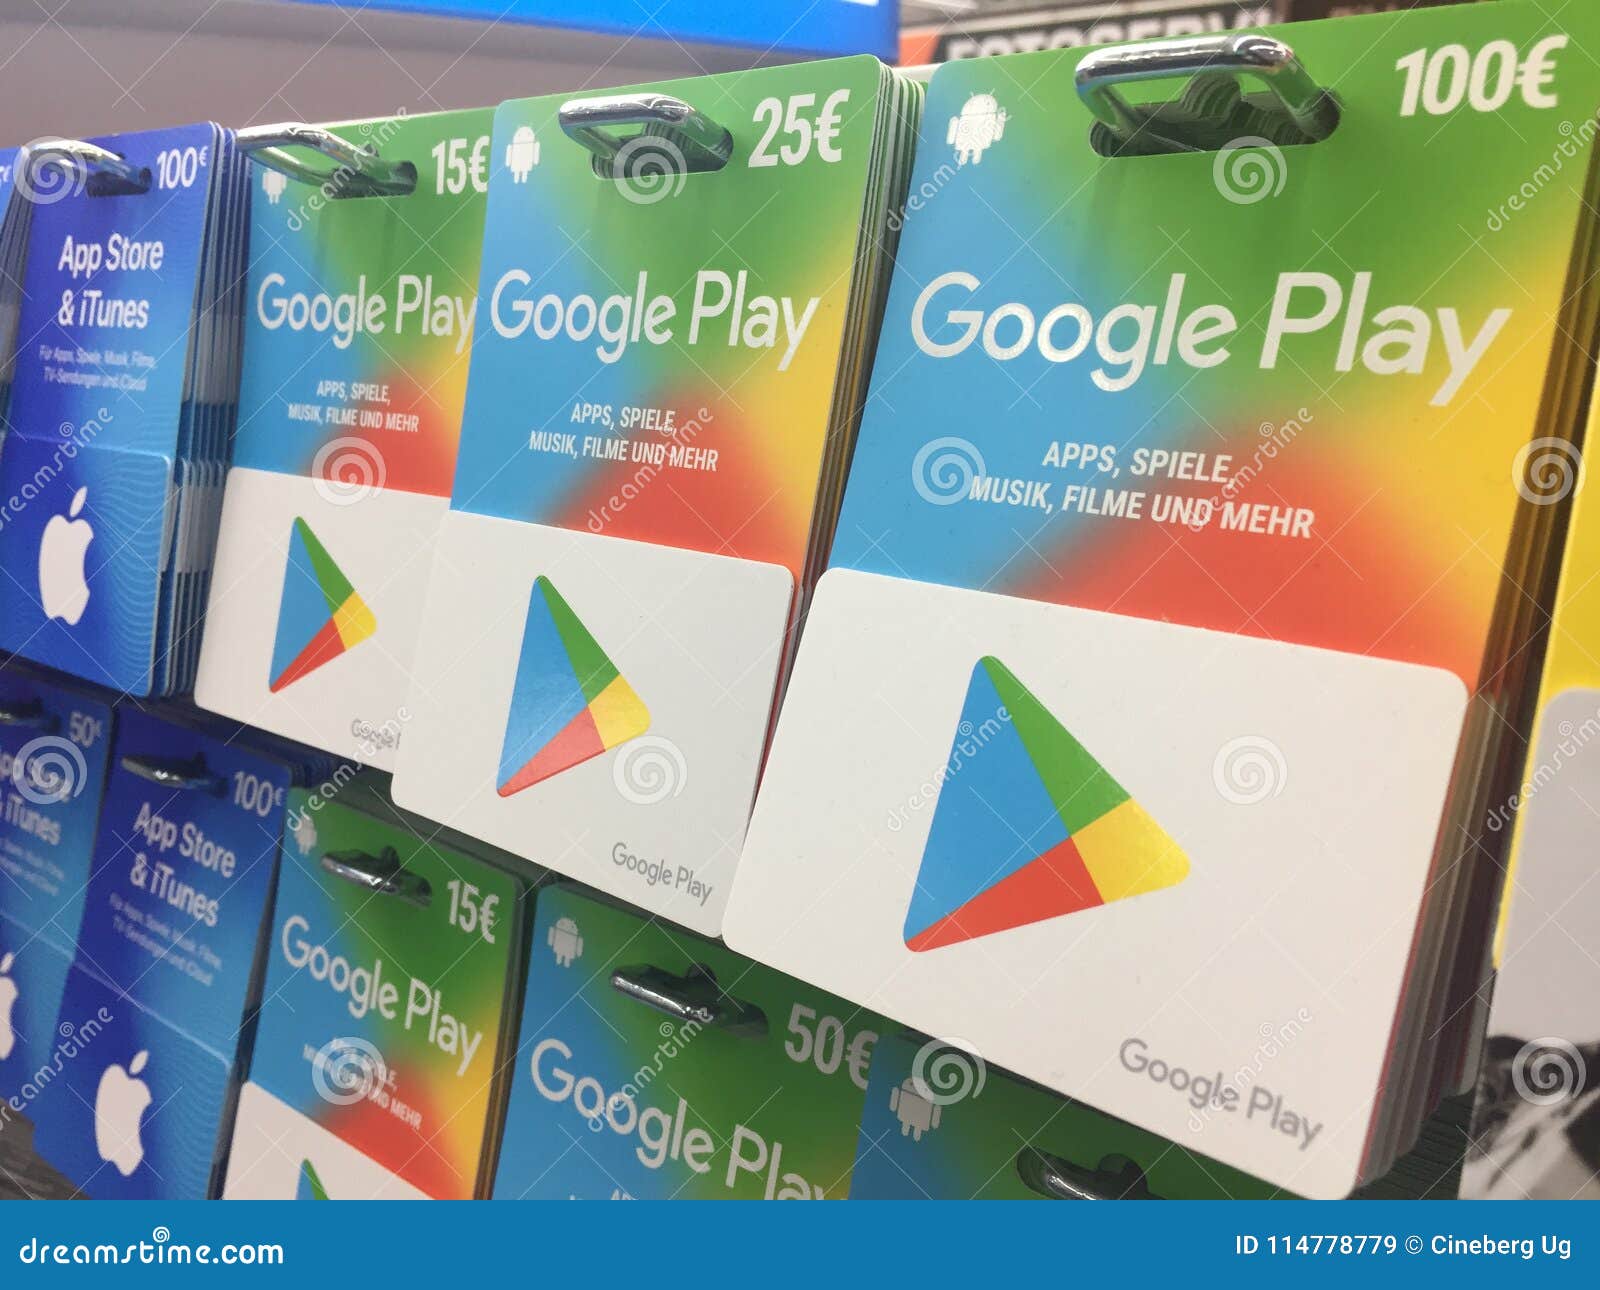 Buy Google Play Gift Card 20 PLN POLAND - Cheap - G2A.COM!